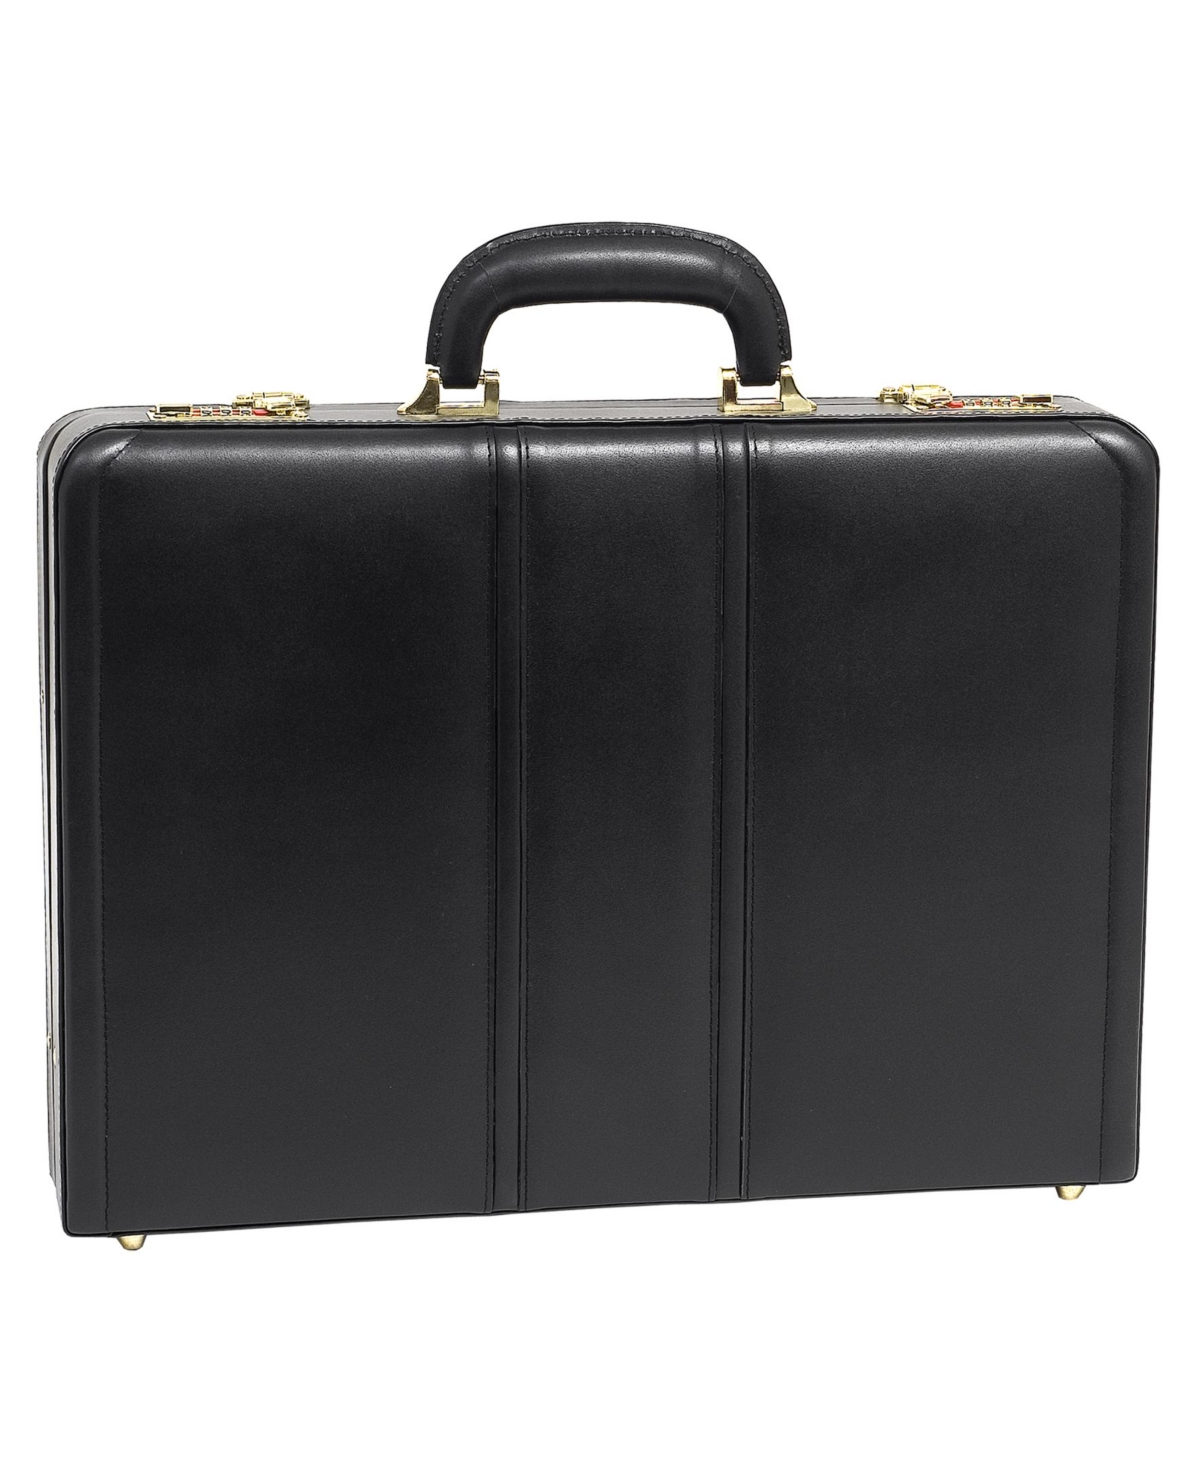 Coughlin Expandable Attache Briefcase - Black